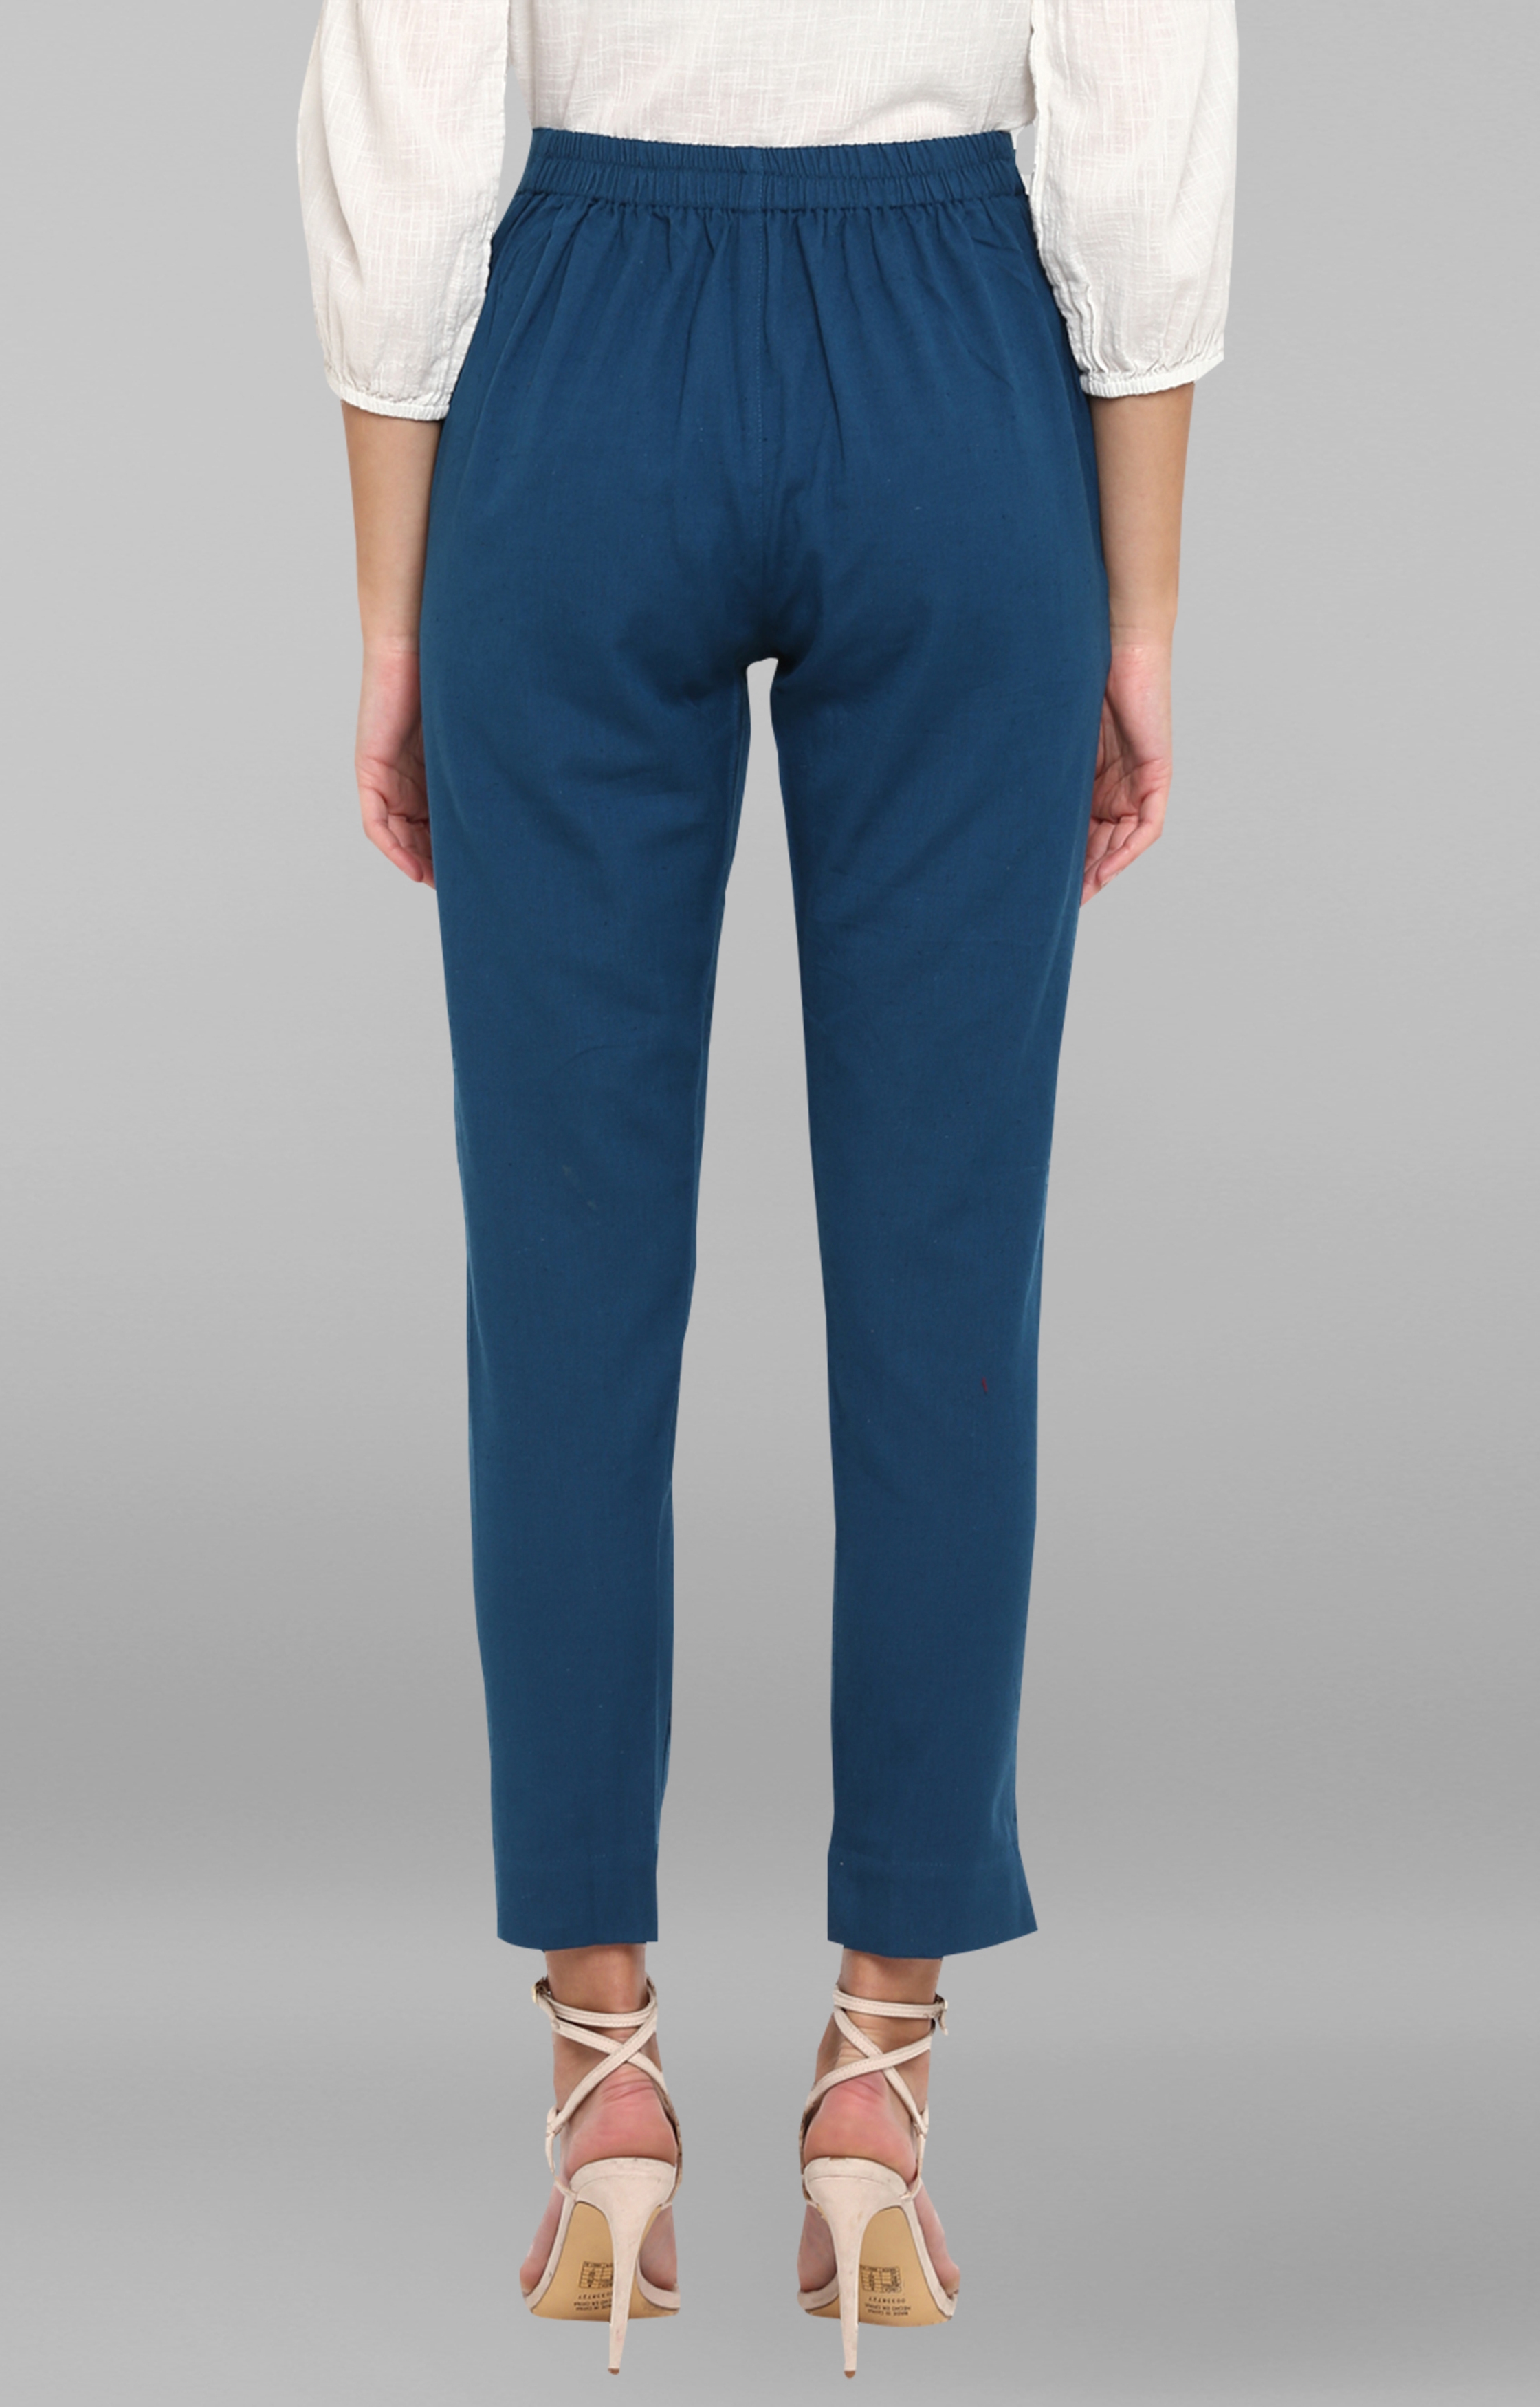 Janasya | Janasya Women's Turquoise Blue Solid Pure Cotton Narrow Pant 3